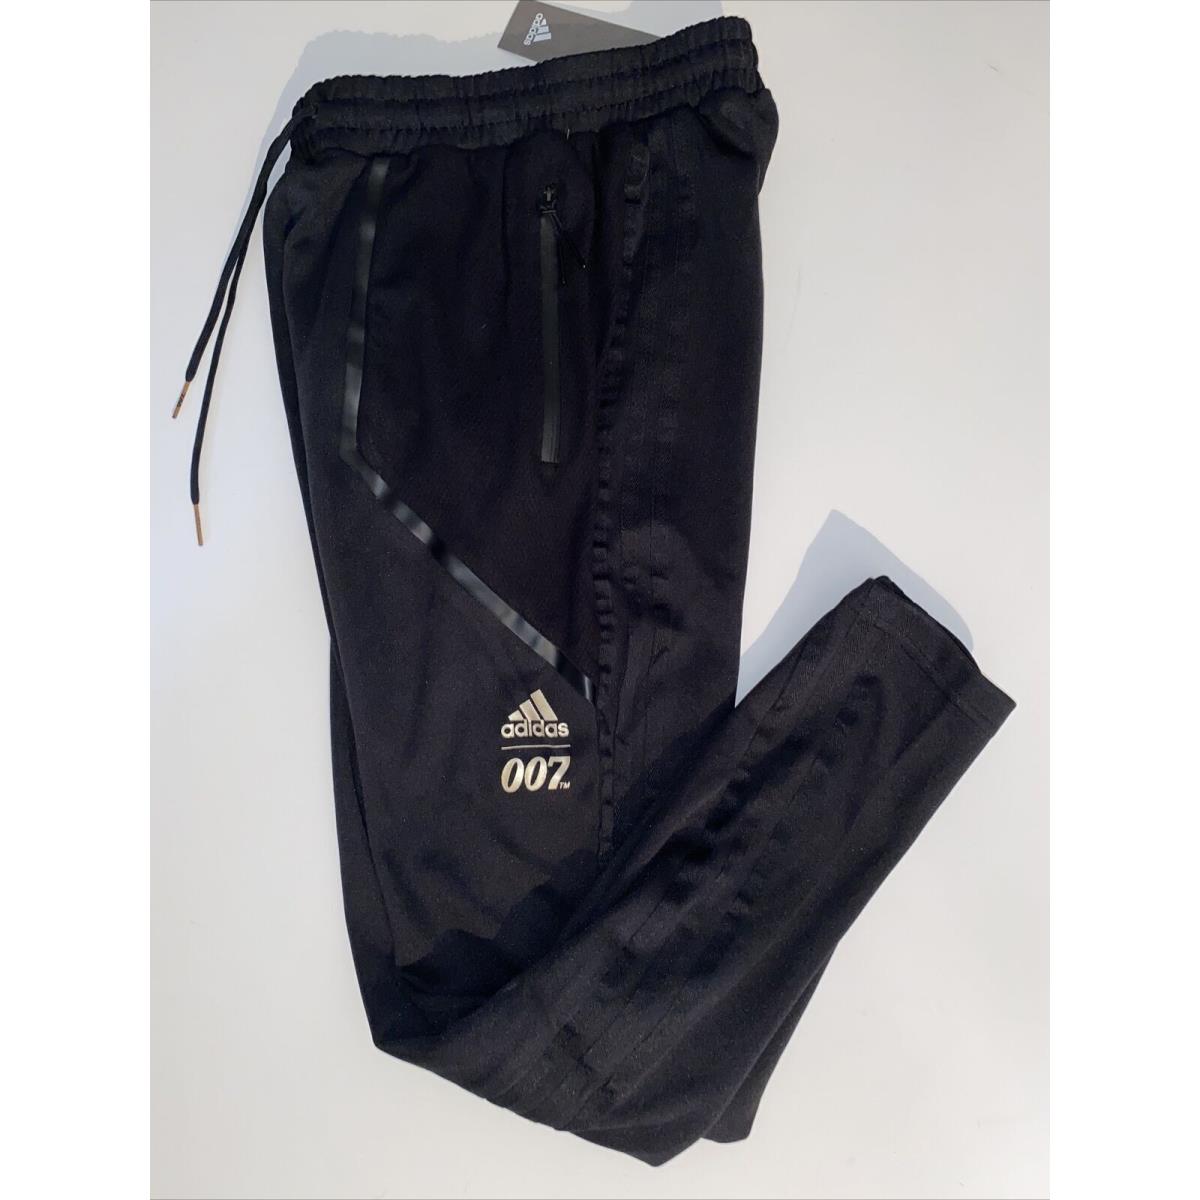 Adidas X 007 James Bond Track Pants Black GN6809 Mens Sz XS